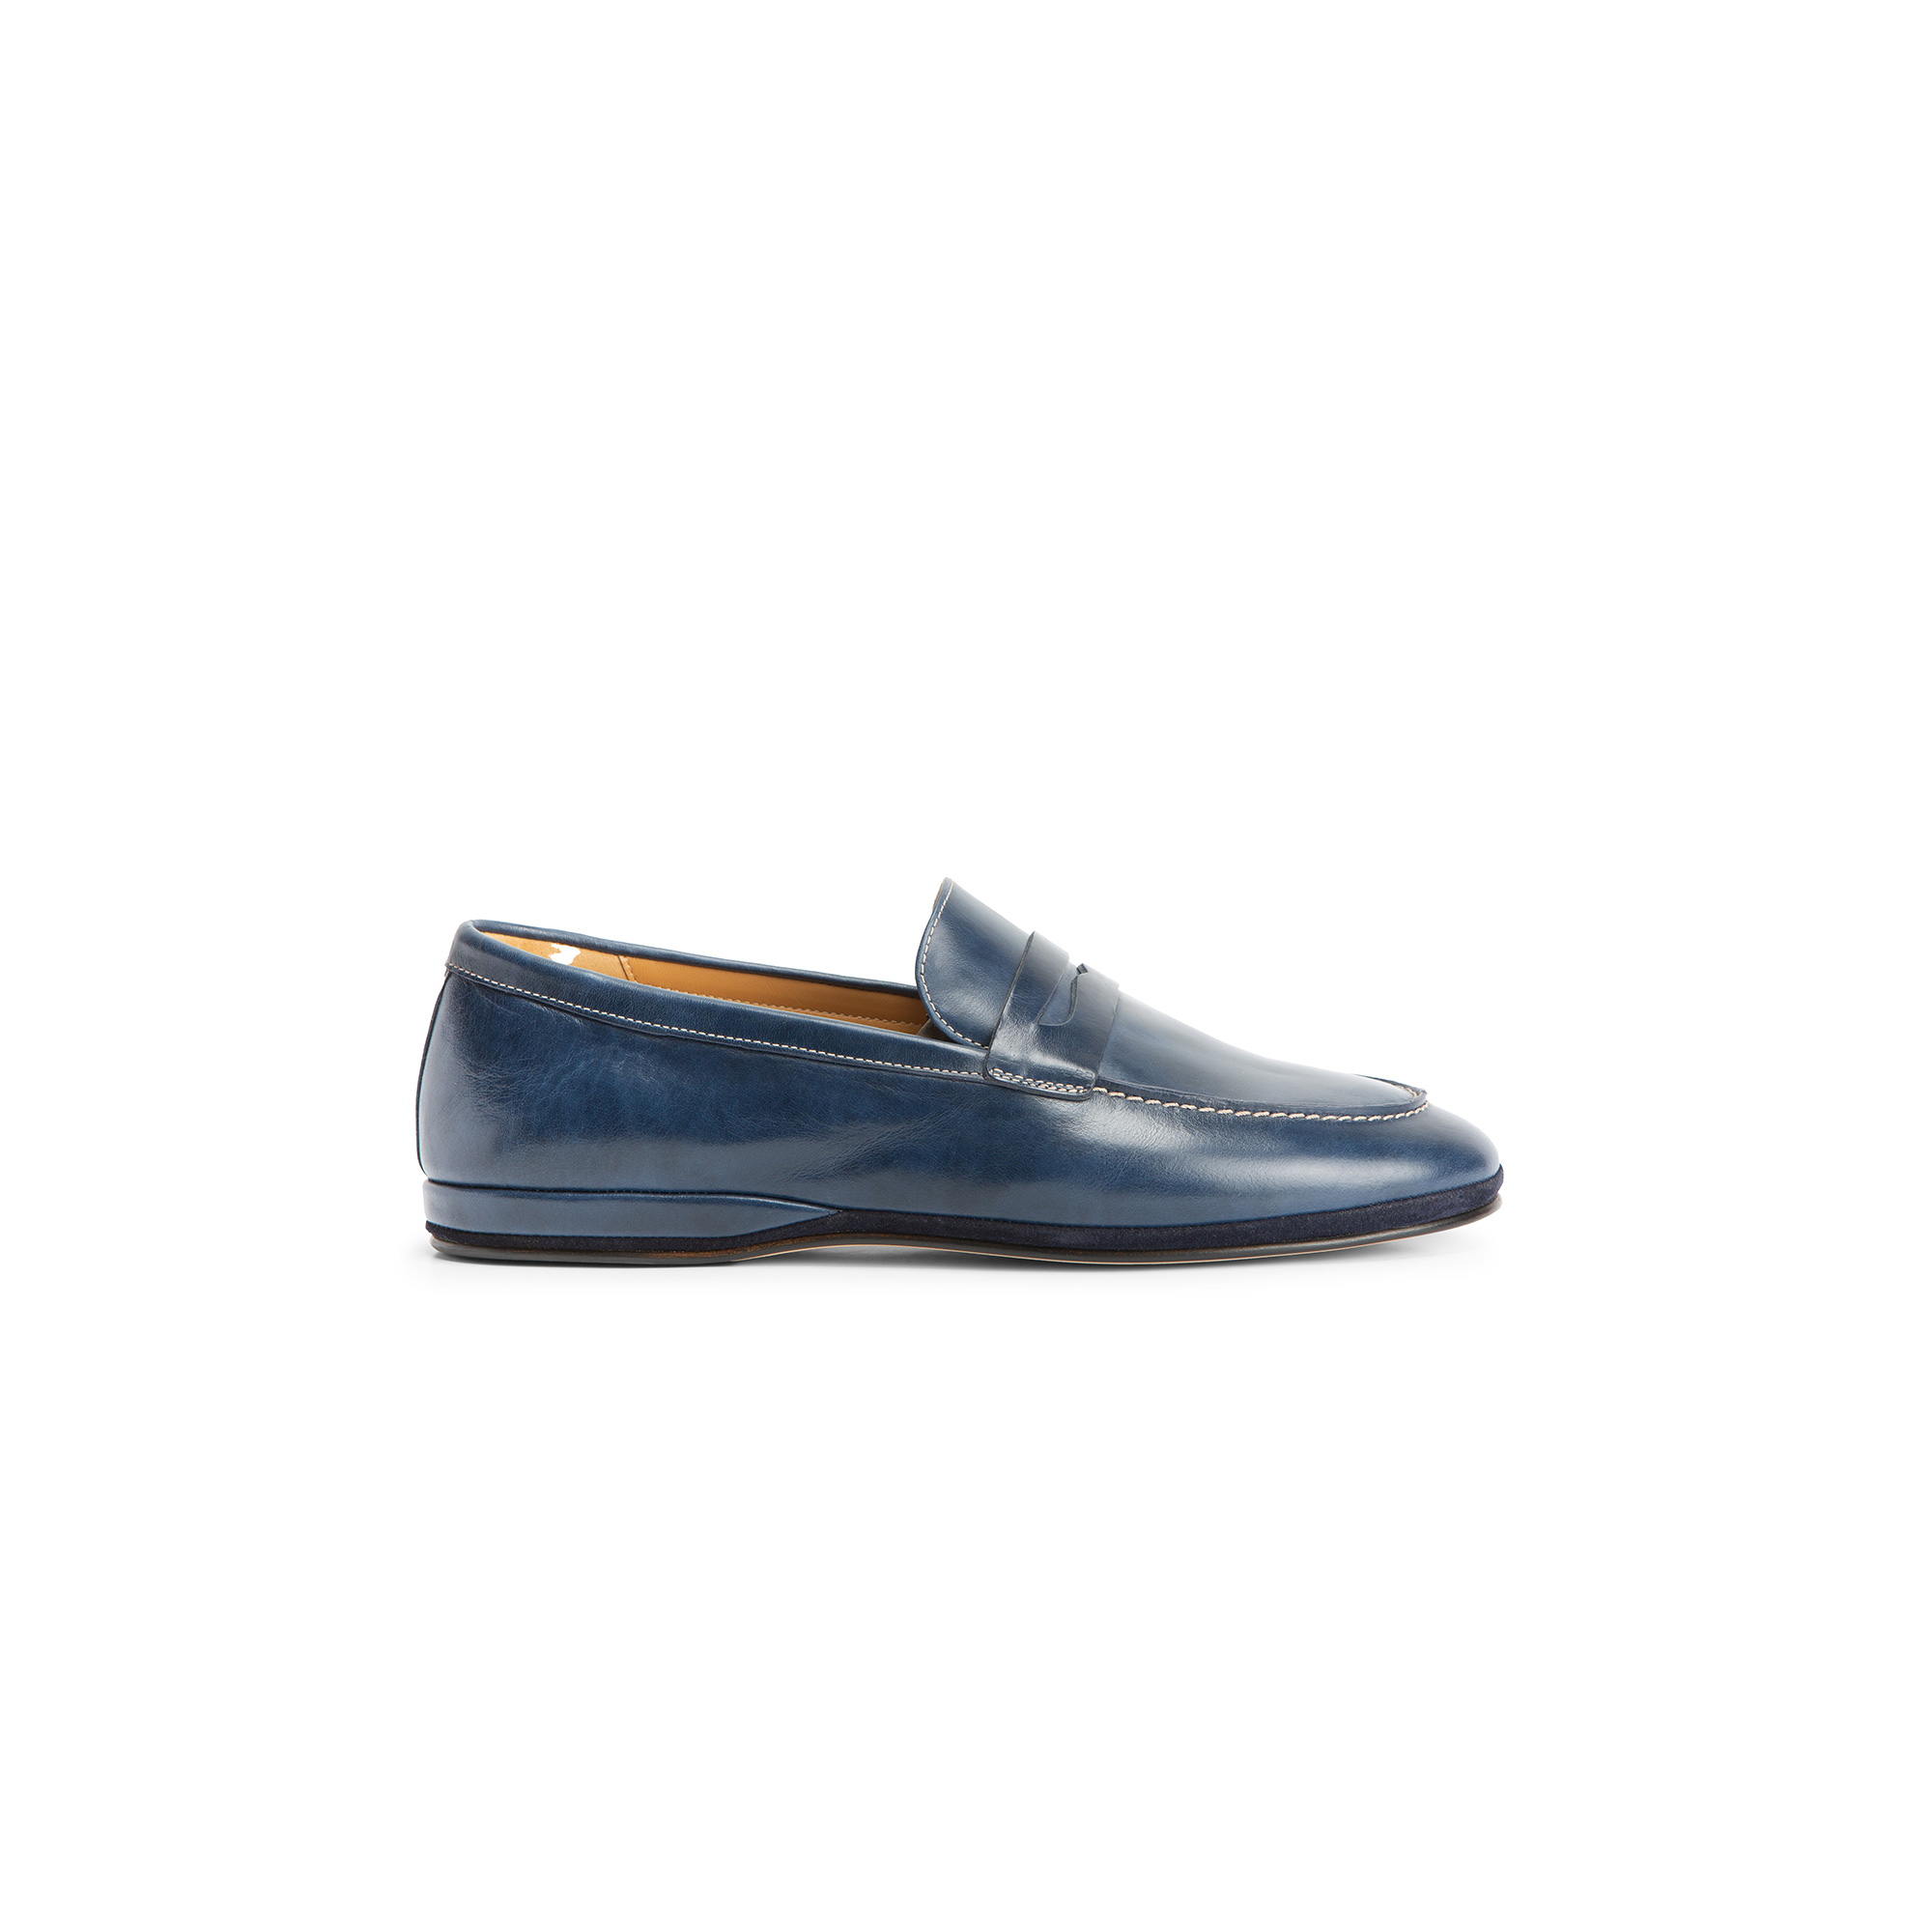 Outside closed blue calf leather slipper - Farfalla italian slippers